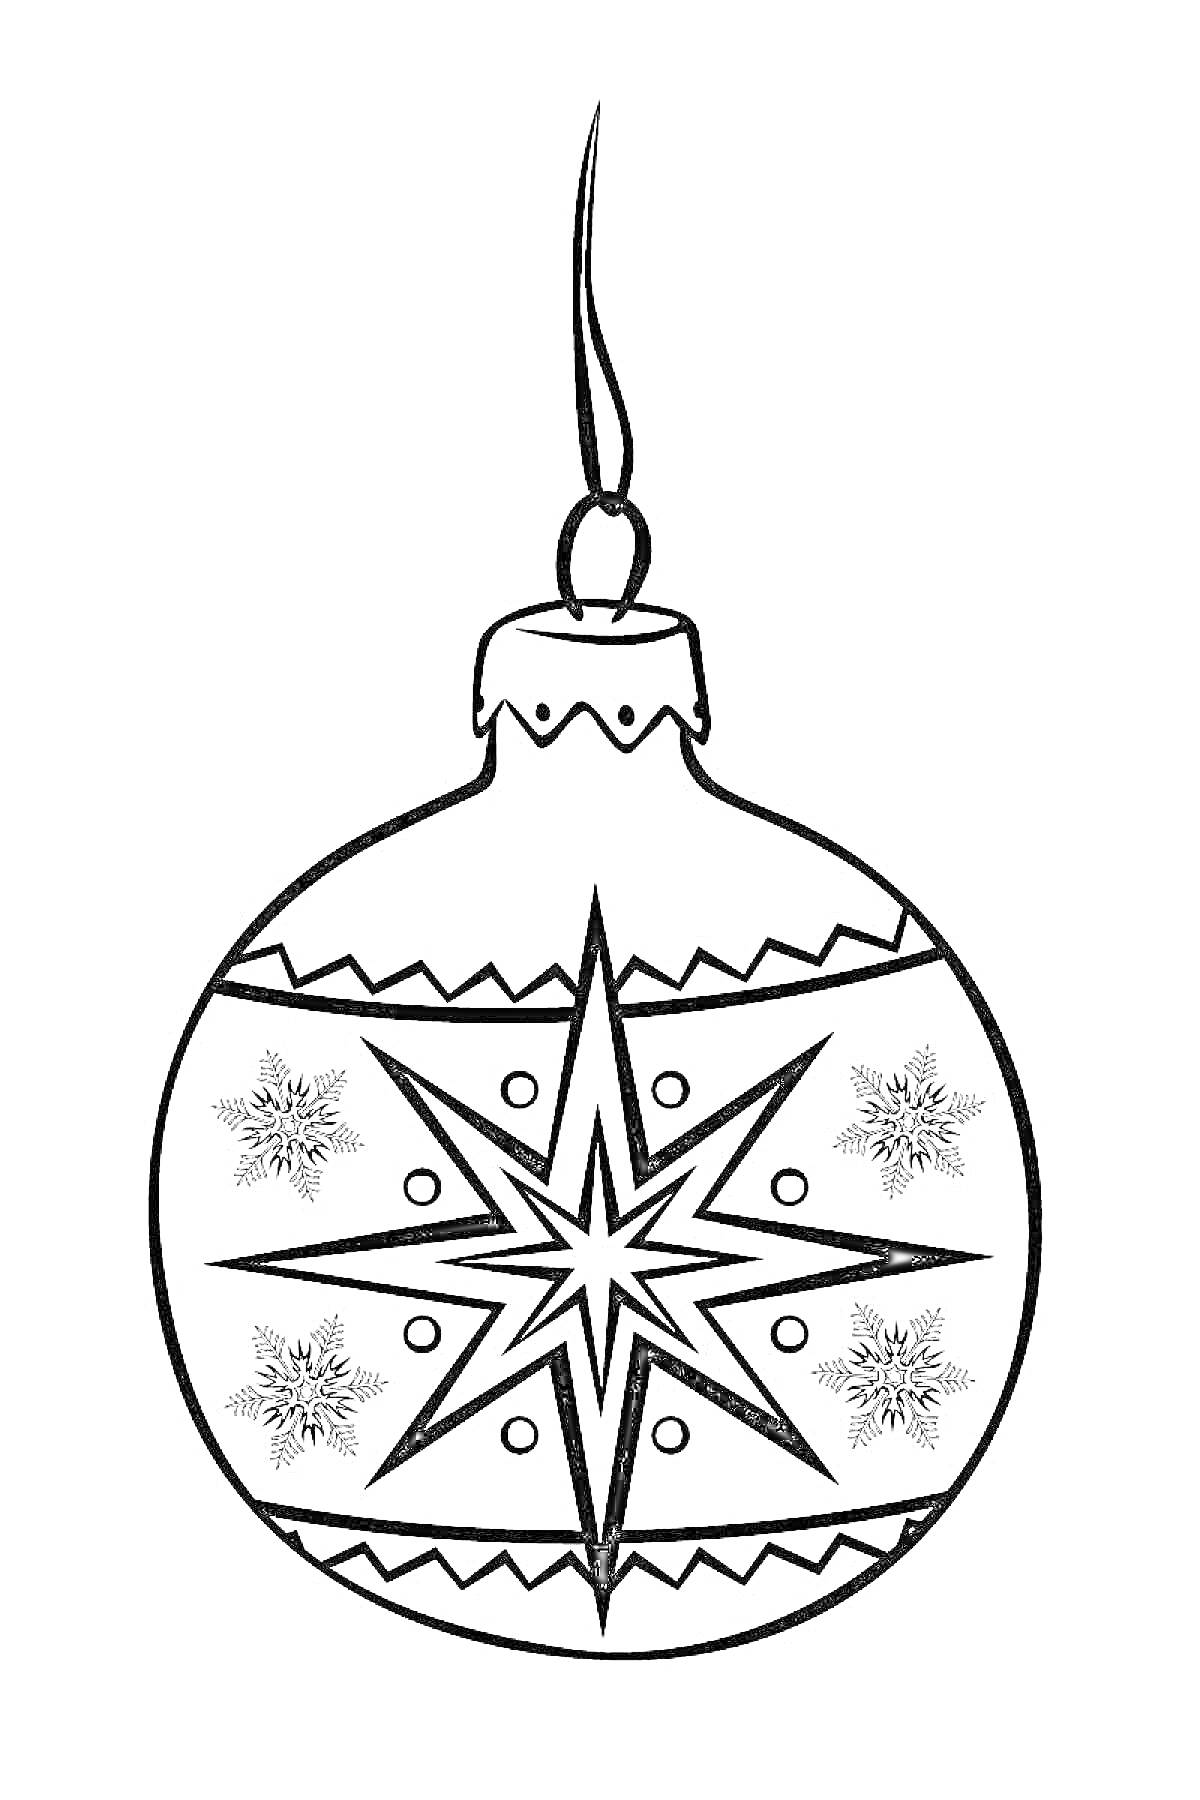 Новогодний шар с узором в виде звезды и снежинок